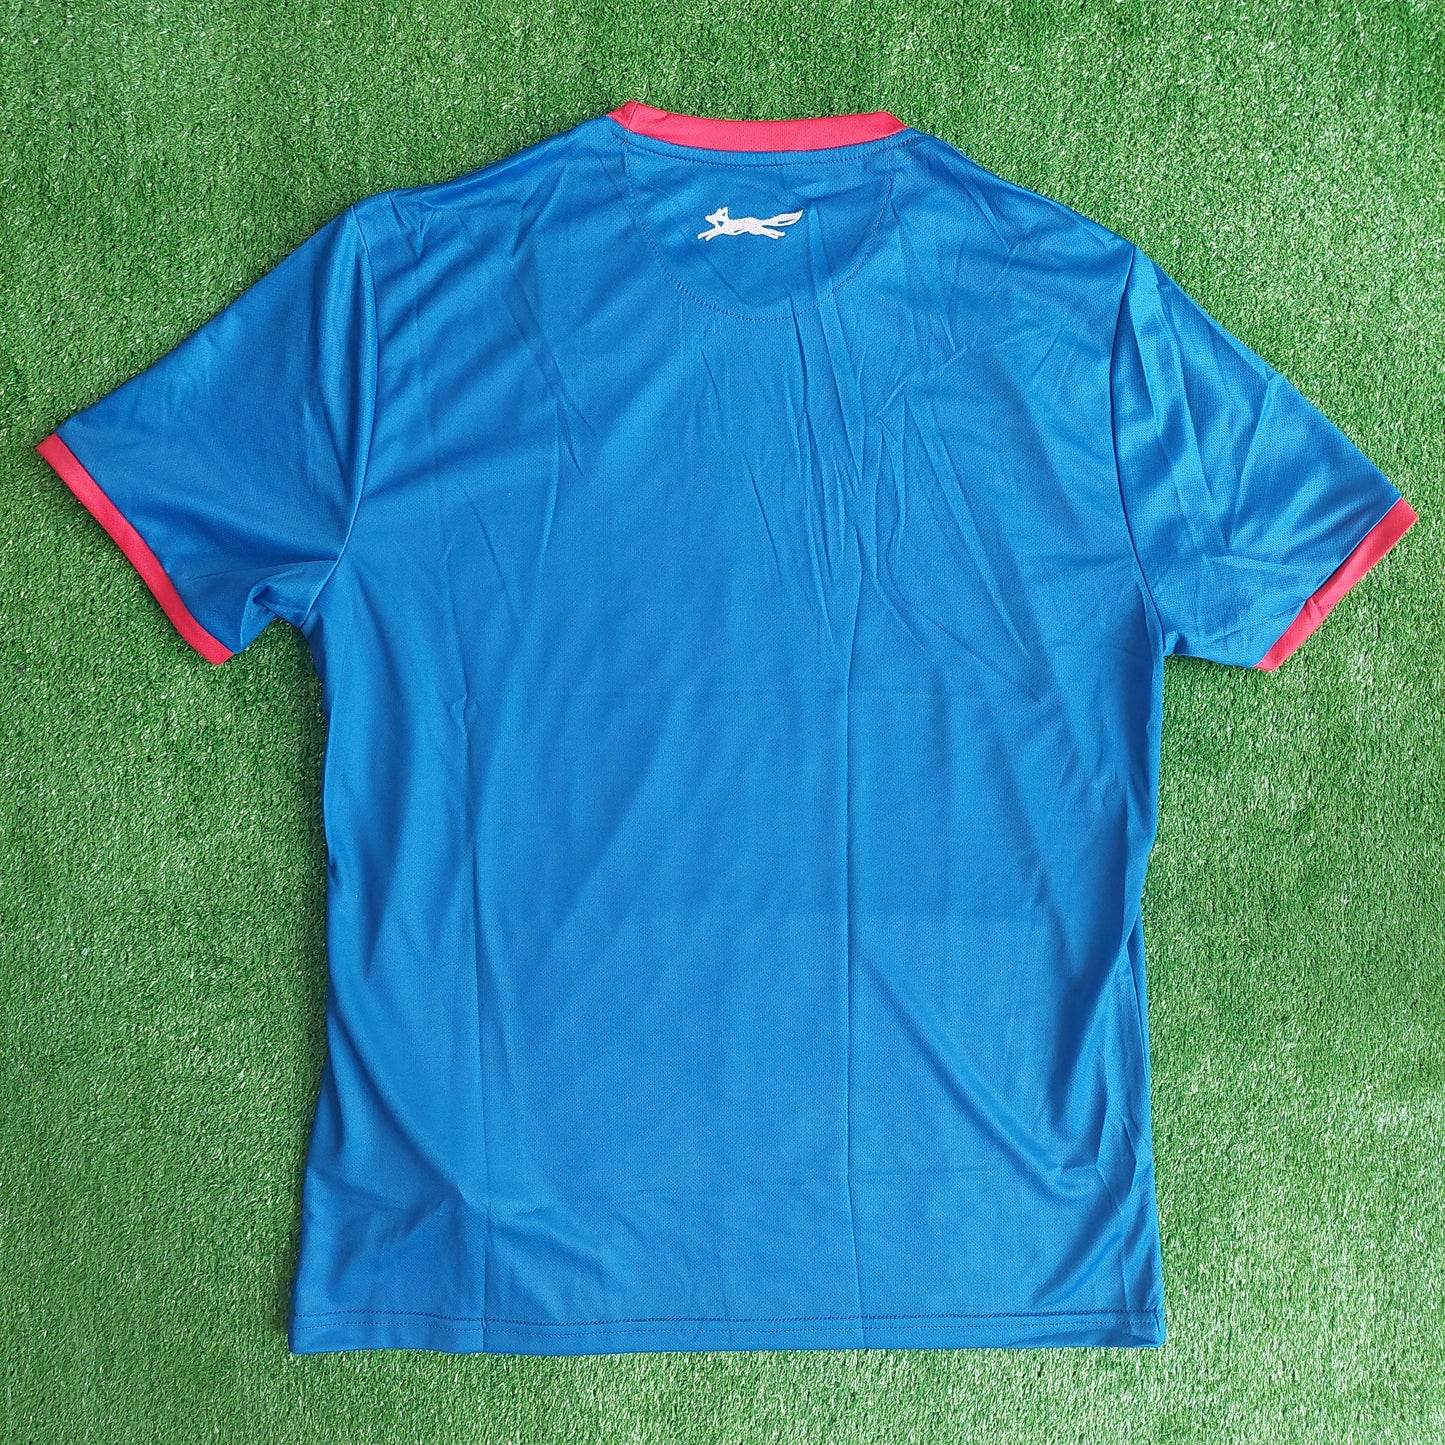 Carlisle United 2021/22 Home Shirt (BNWT) - Size XL